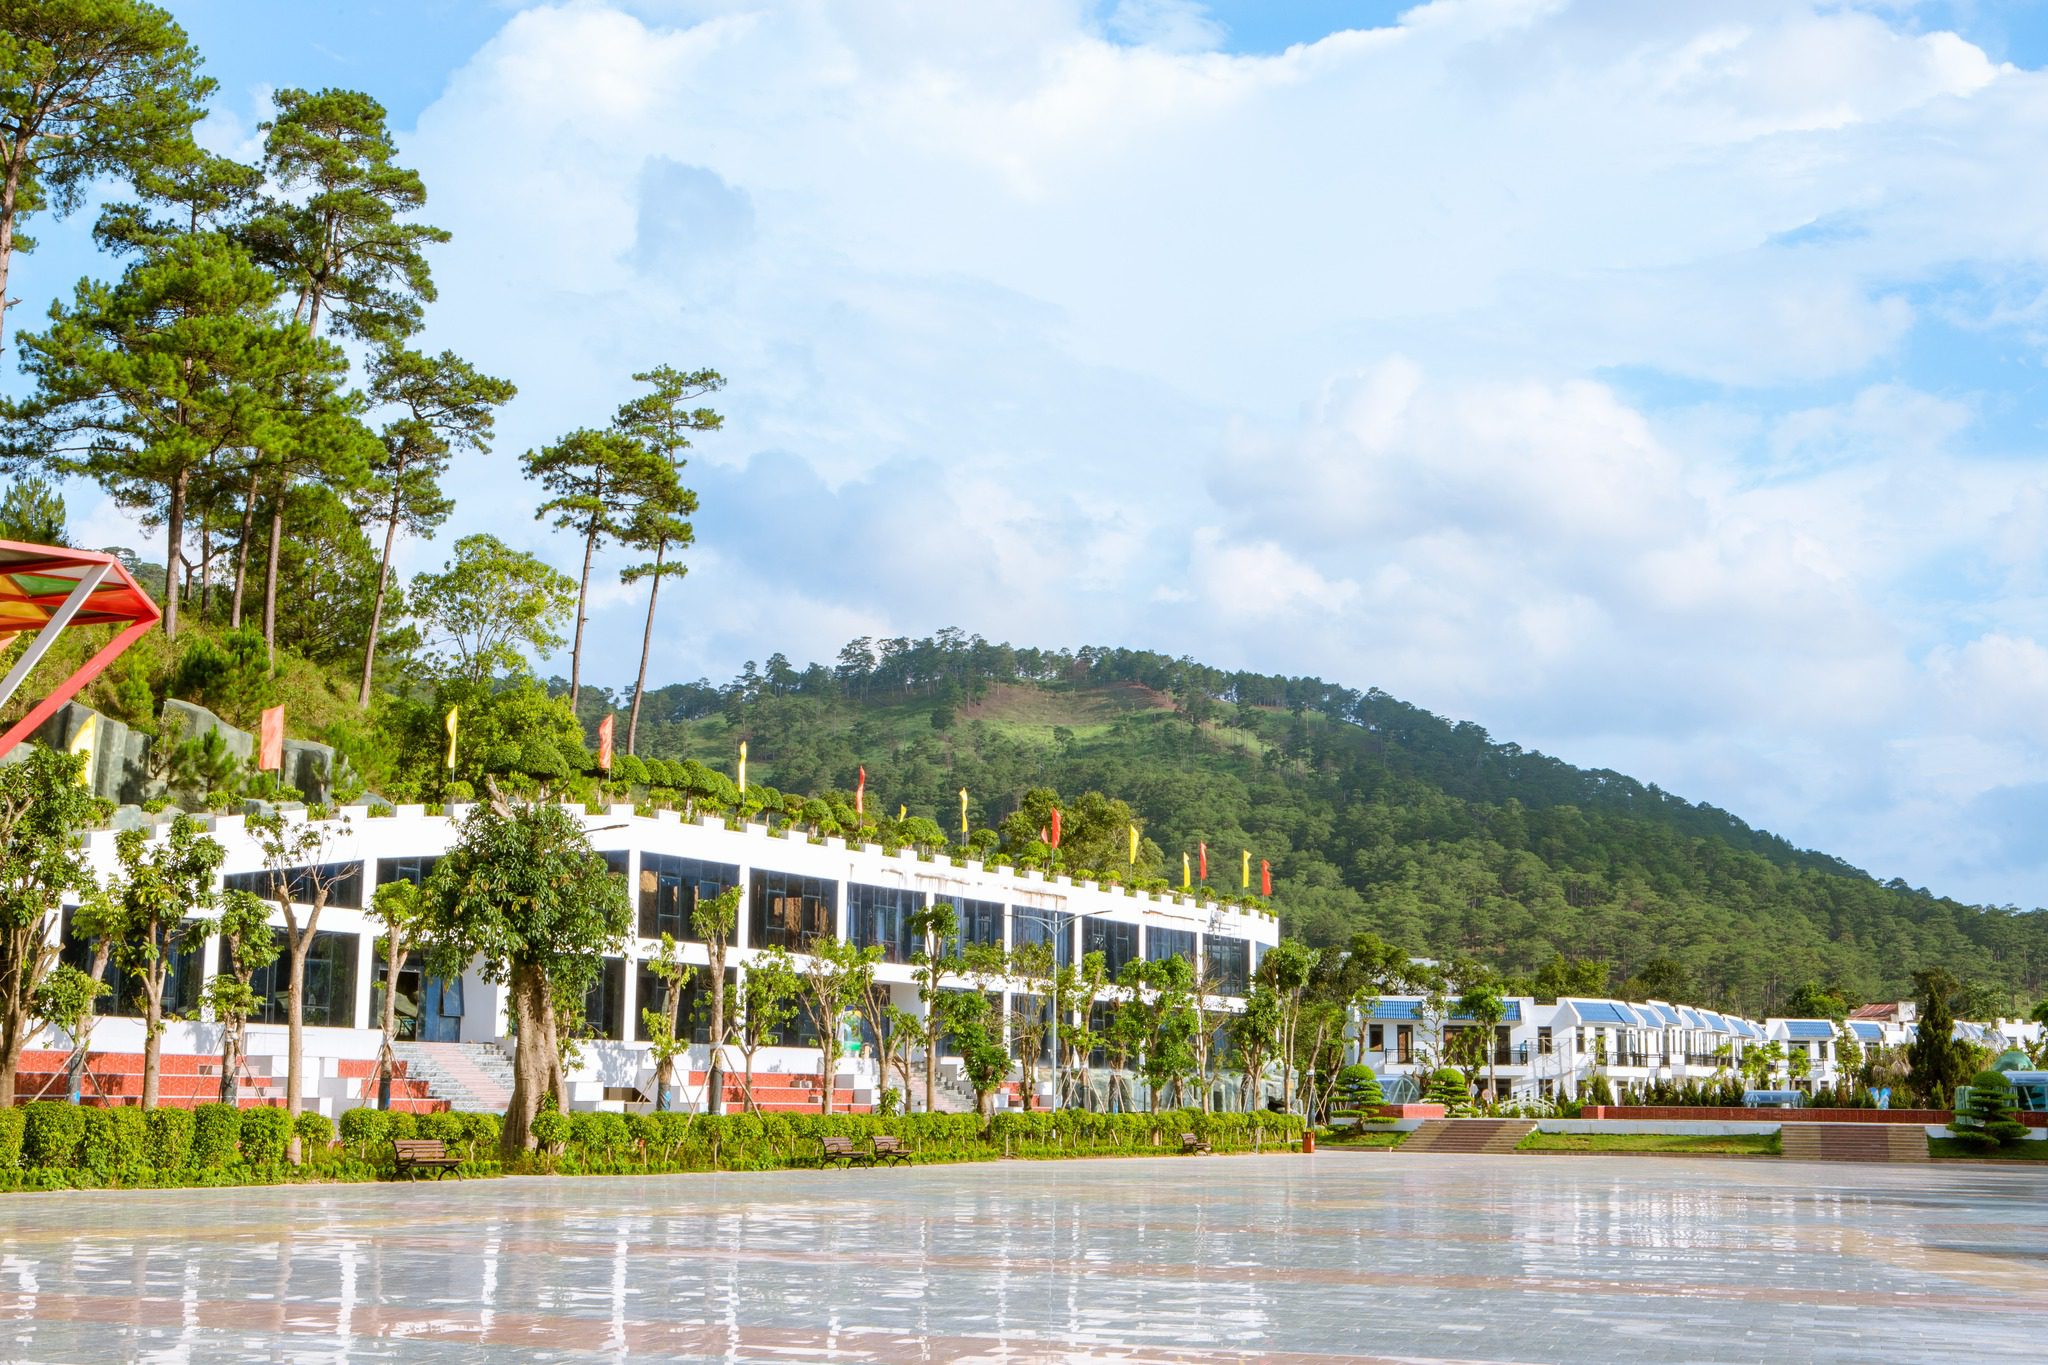 Explore the classy entertainment resort paradise of Da Lat